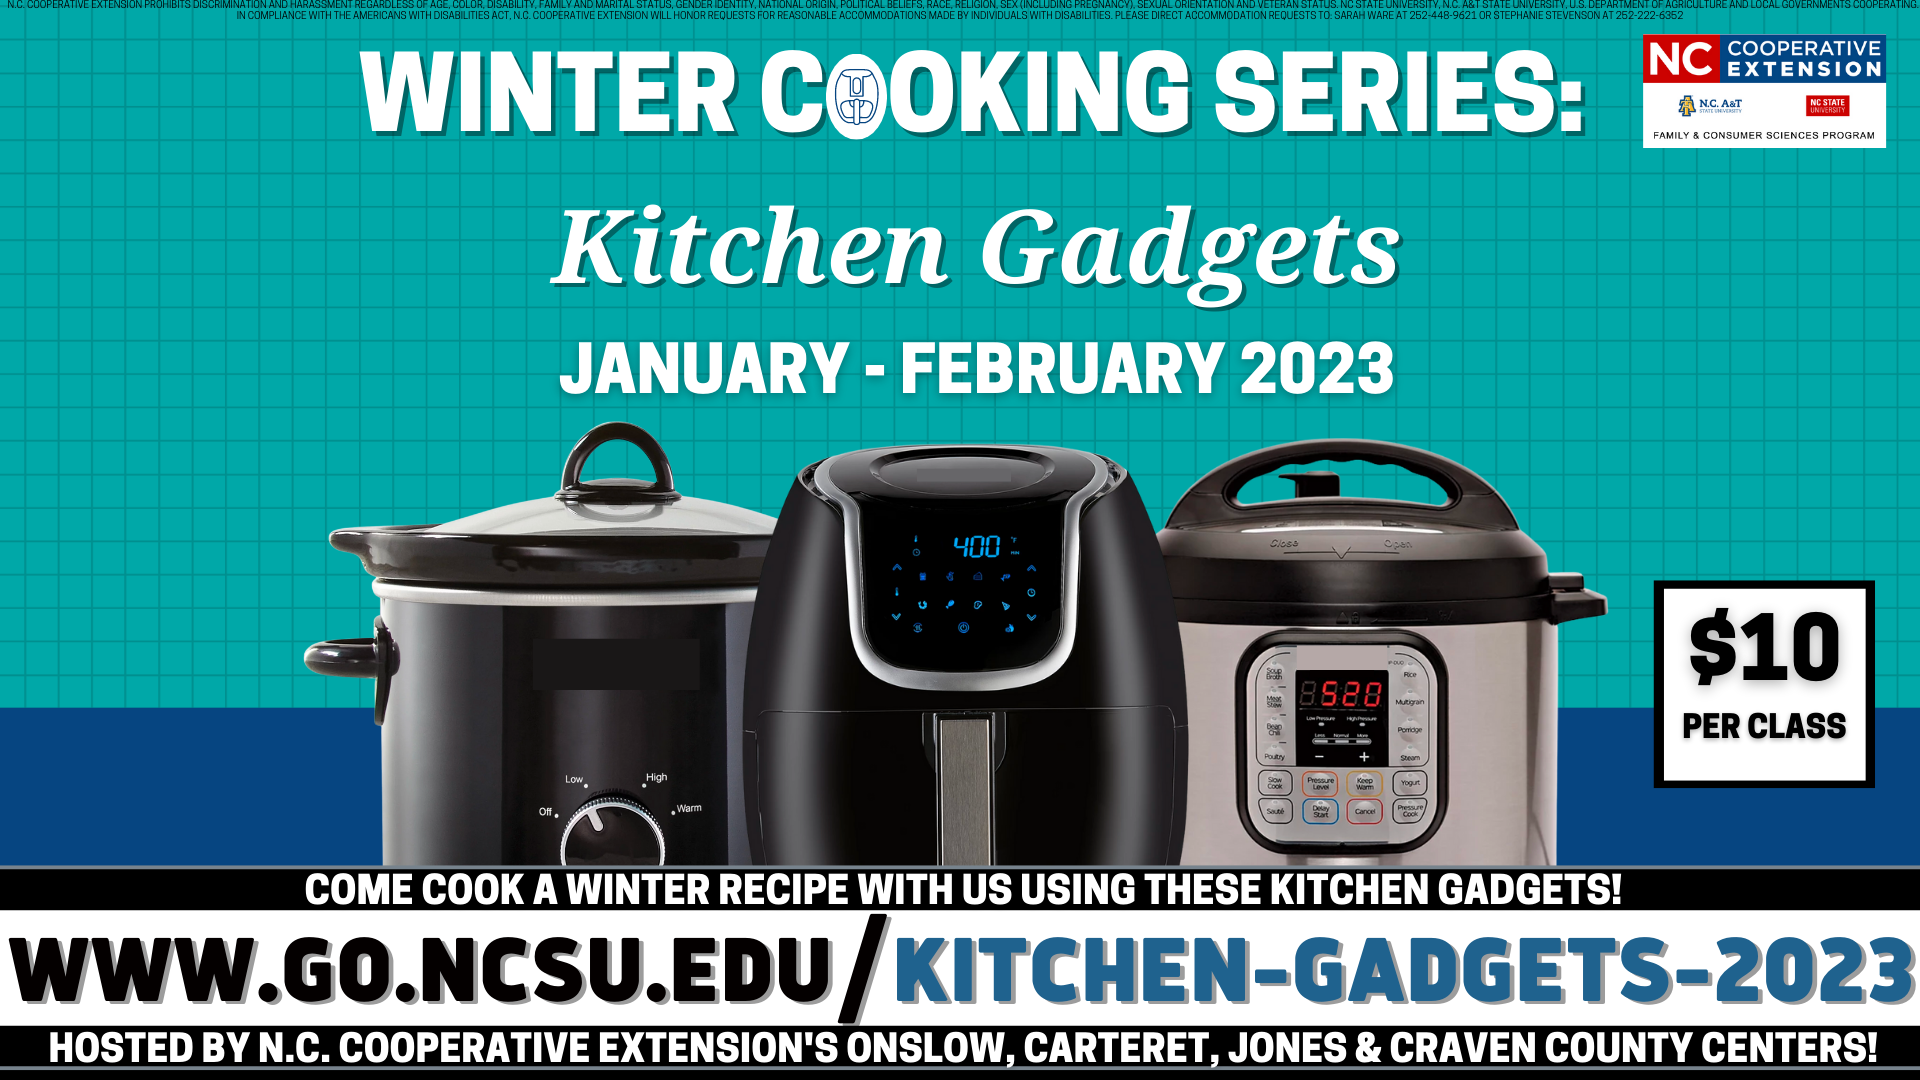 https://jones.ces.ncsu.edu/wp-content/uploads/2022/12/DIGITAL-SIGN-Fall-Cooking-Series-Kitchen-Gadgets-Flyers.png